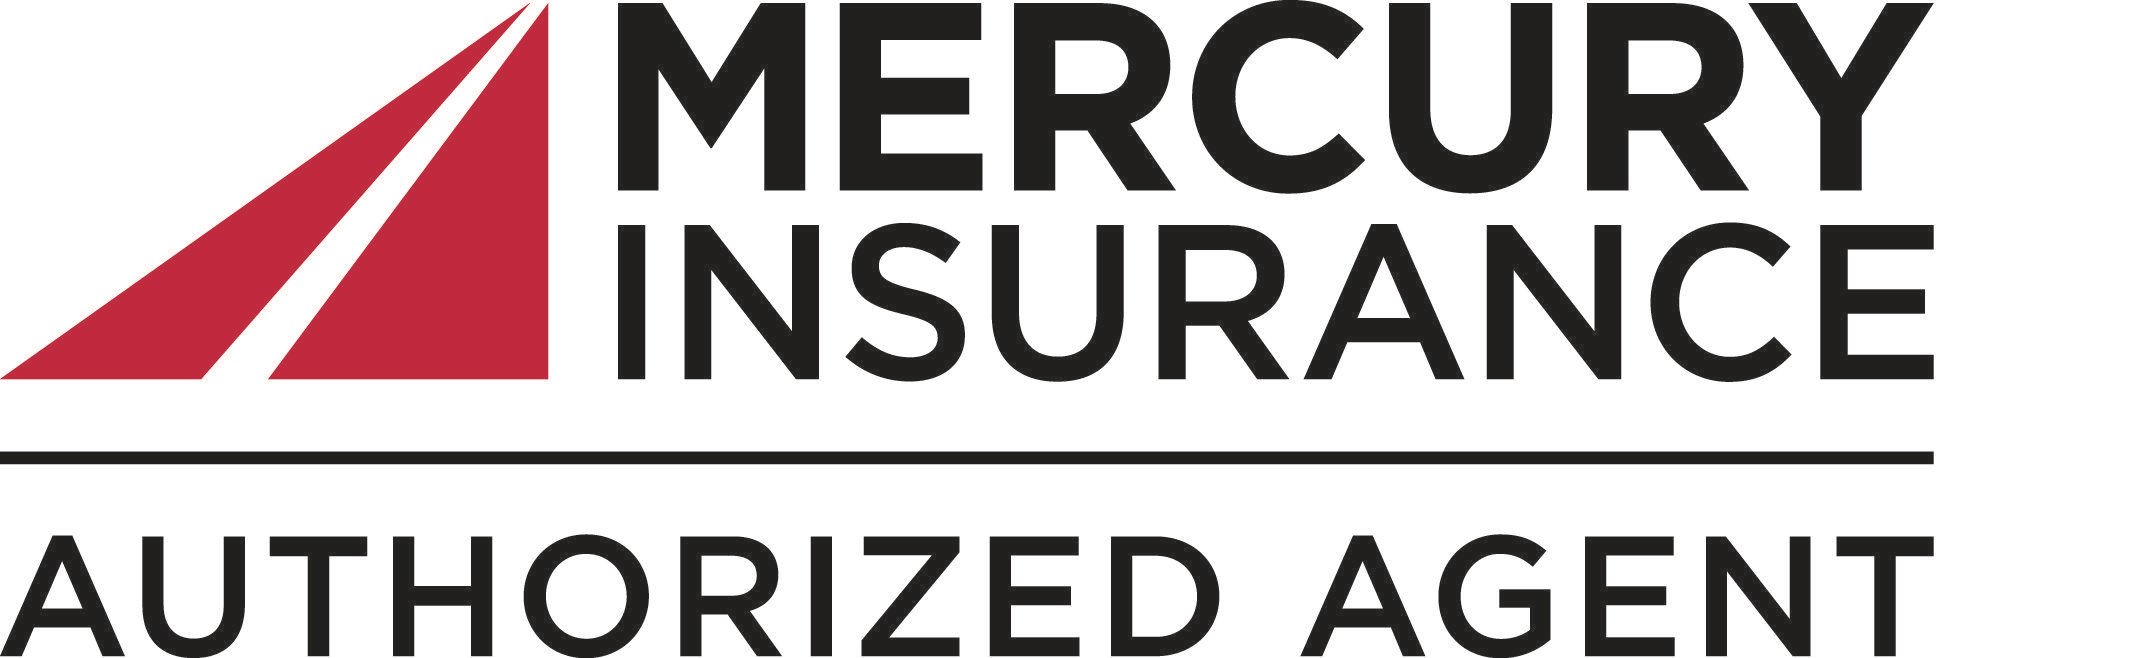 Mercury Insurance Logo - We've Had Two Homeowners's Insurance Program Changes!